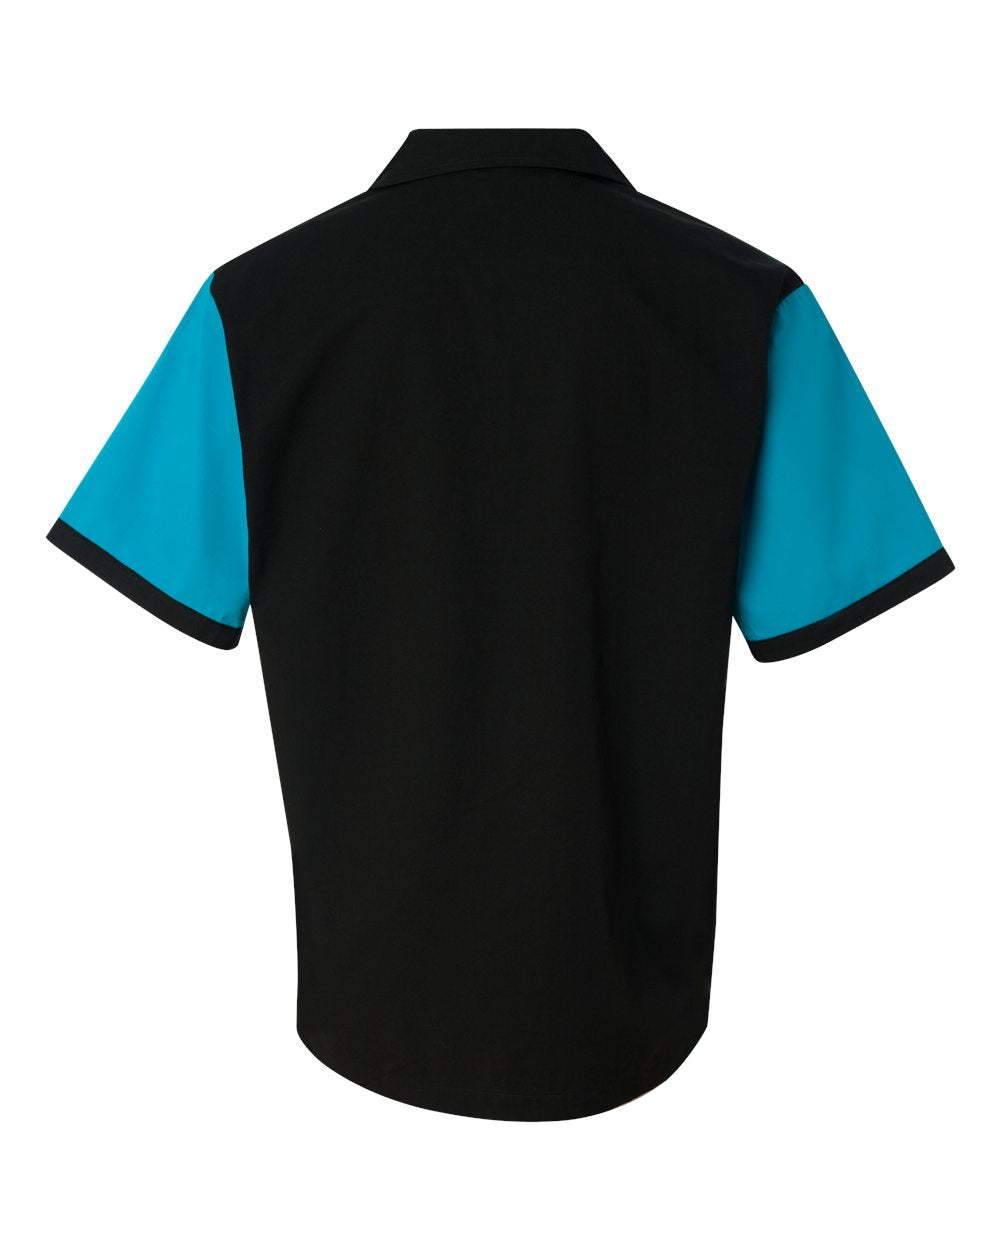 Hilton HP2243 Bowling Shirt Turquoise Custom Text or Design